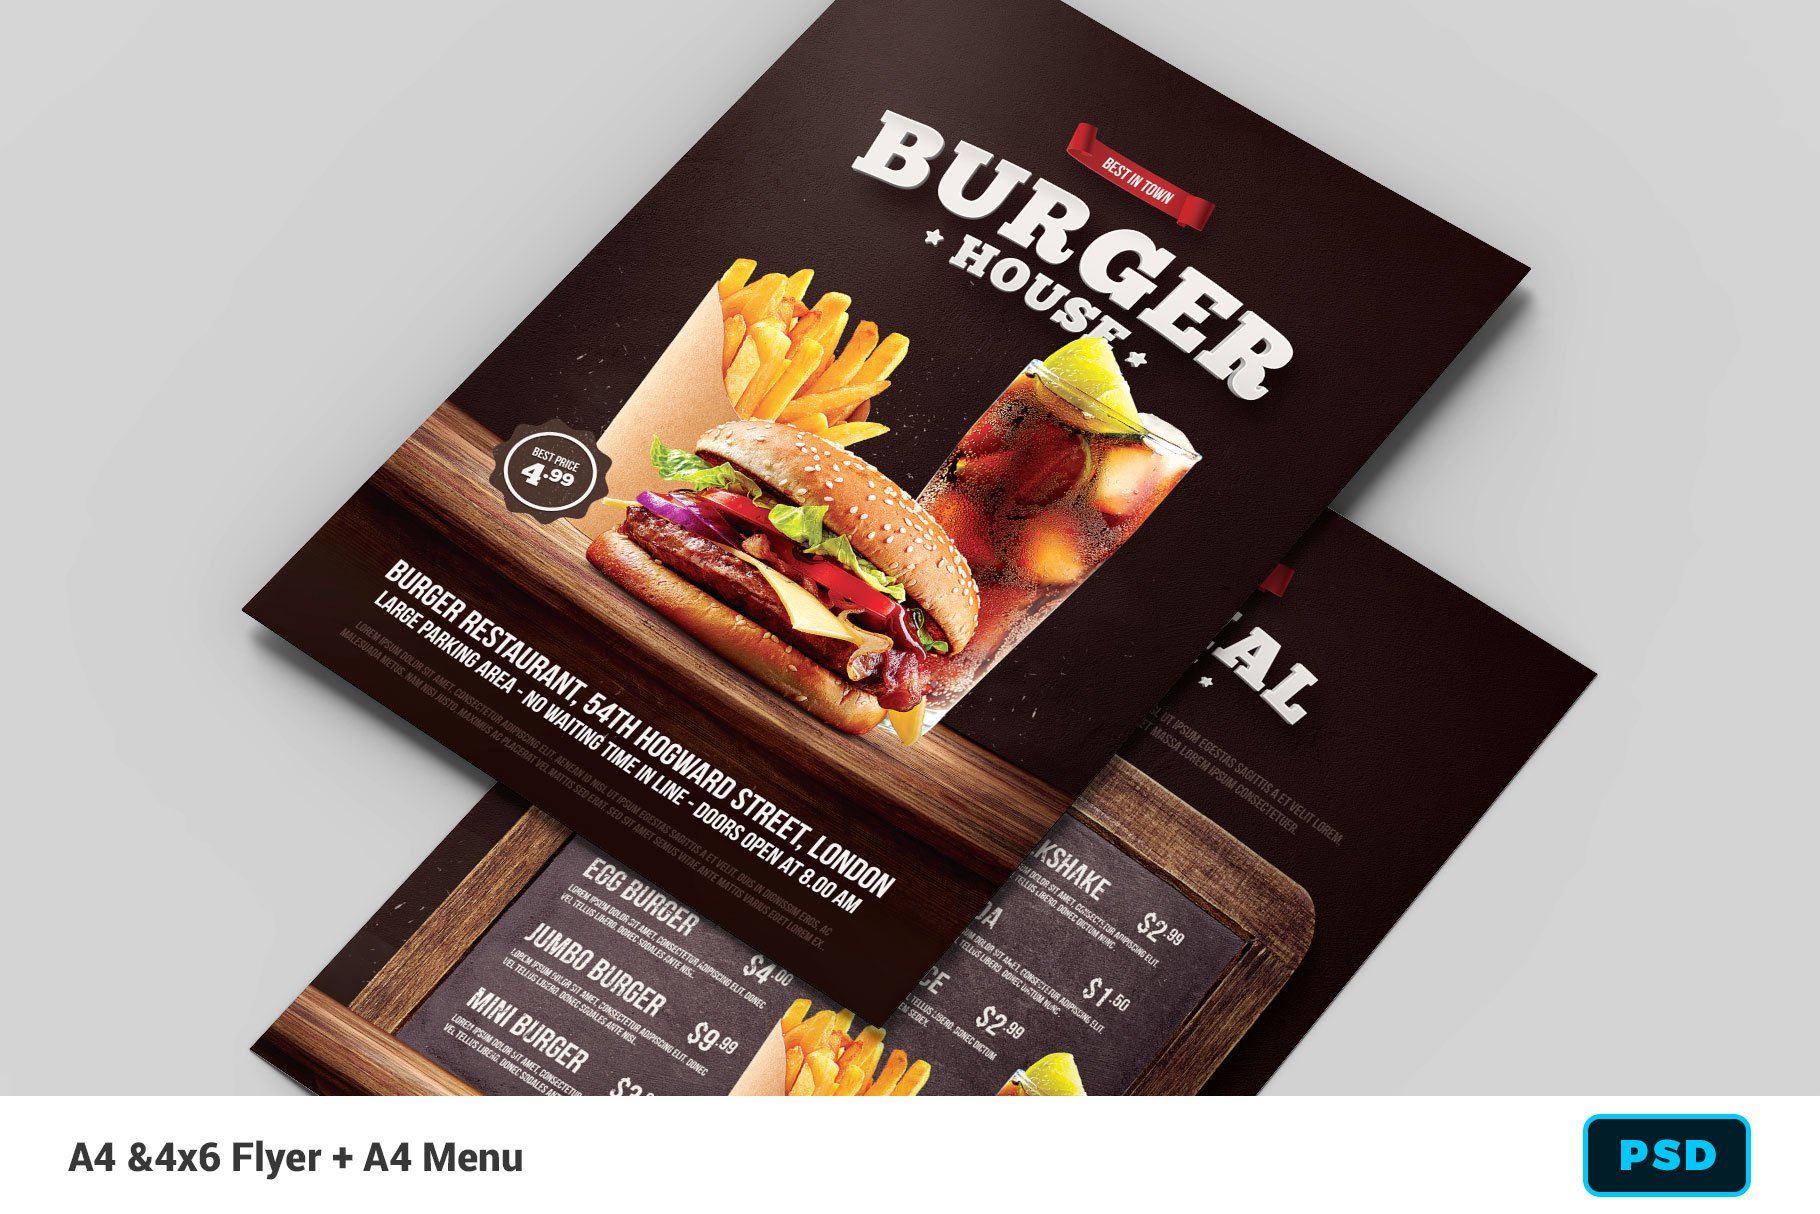 Burger Flyer + Menu preview image.